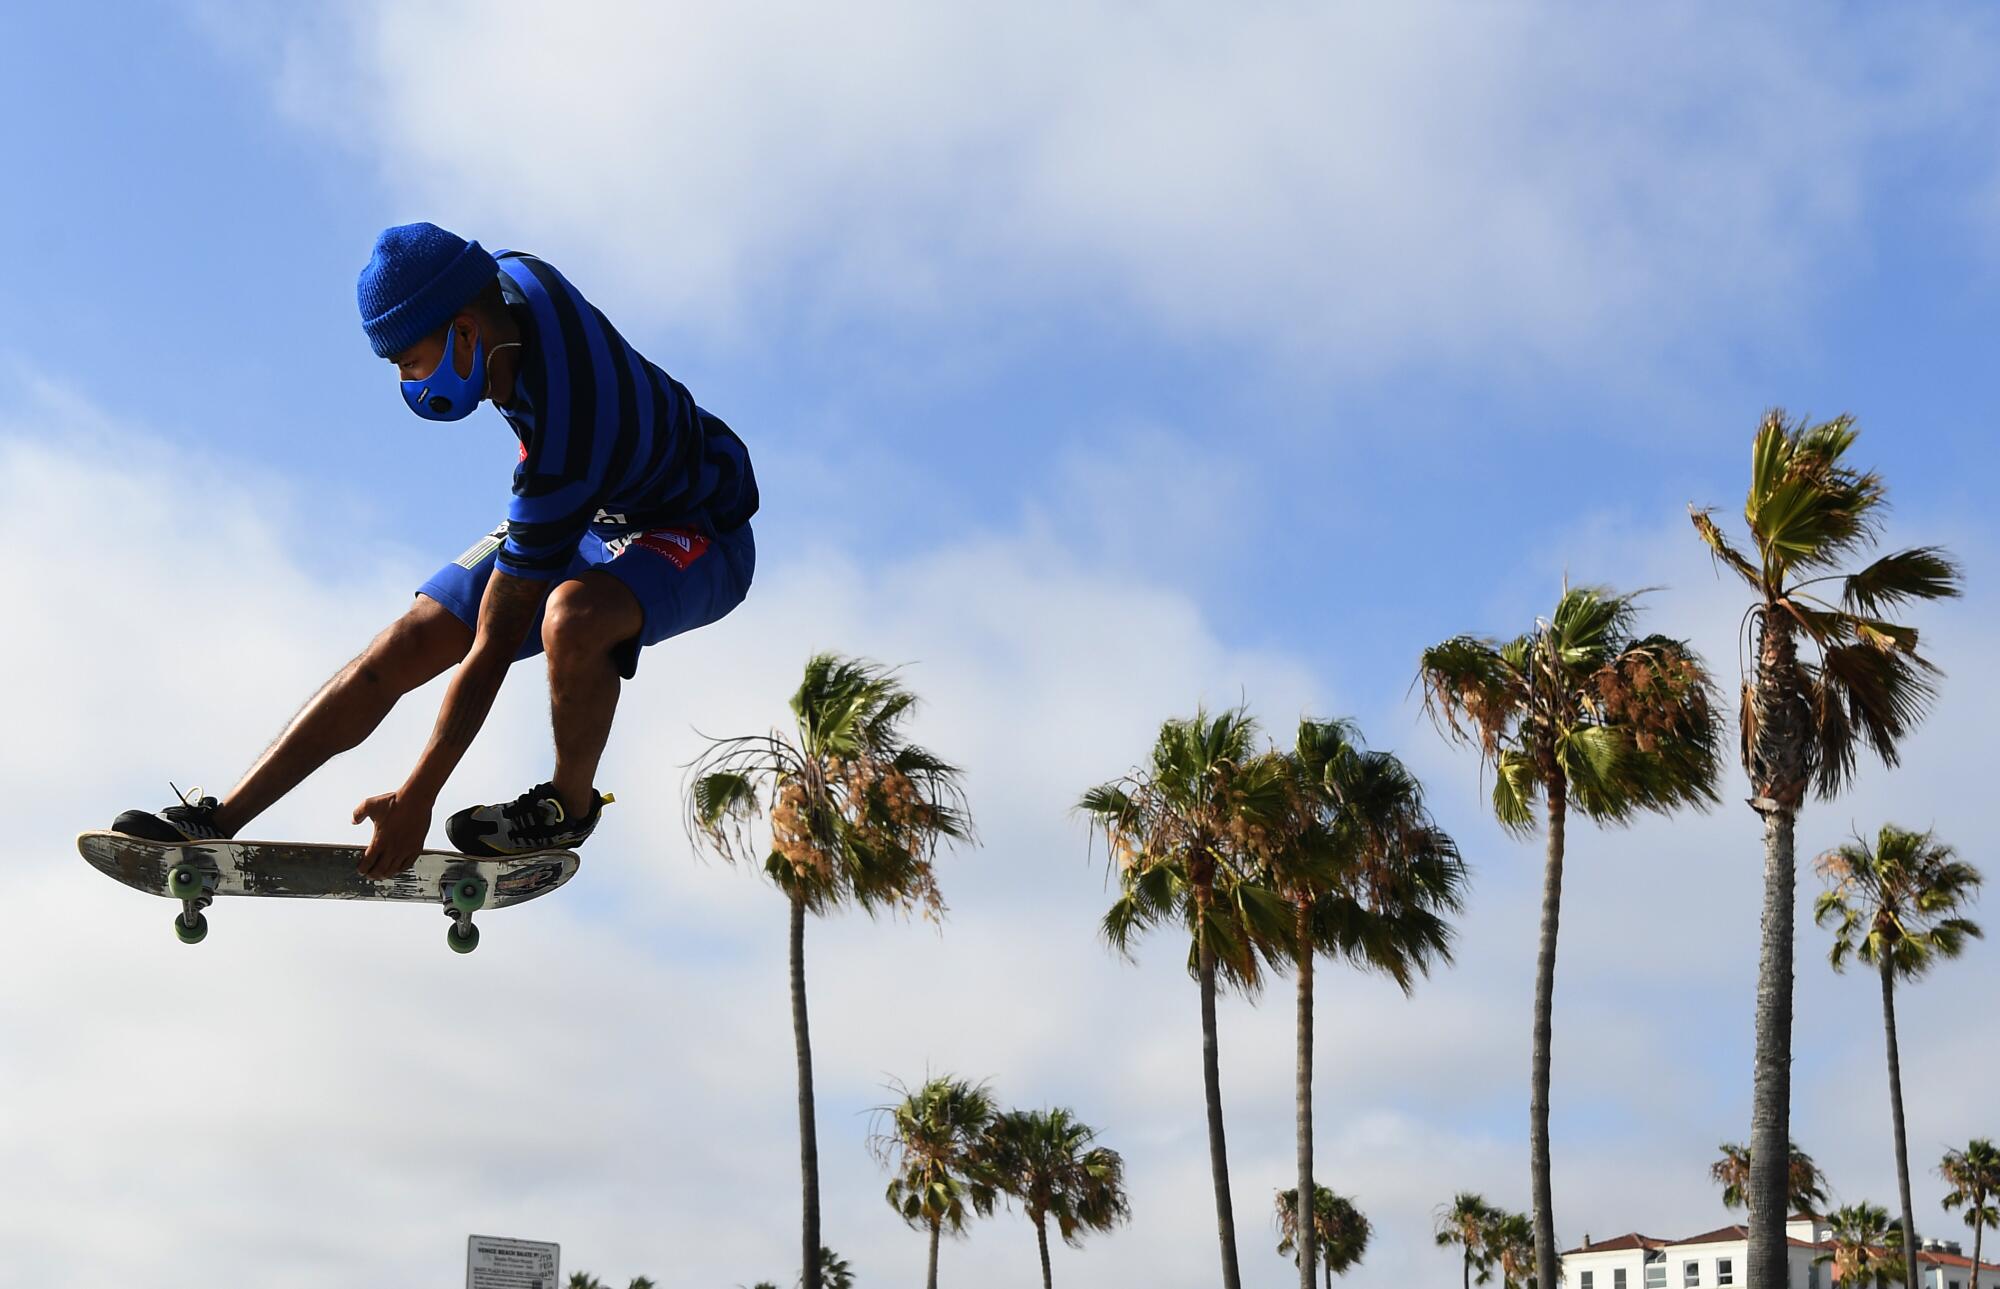 Isiah Hilt gets air while doing tricks in Venice Beach on Tuesday.